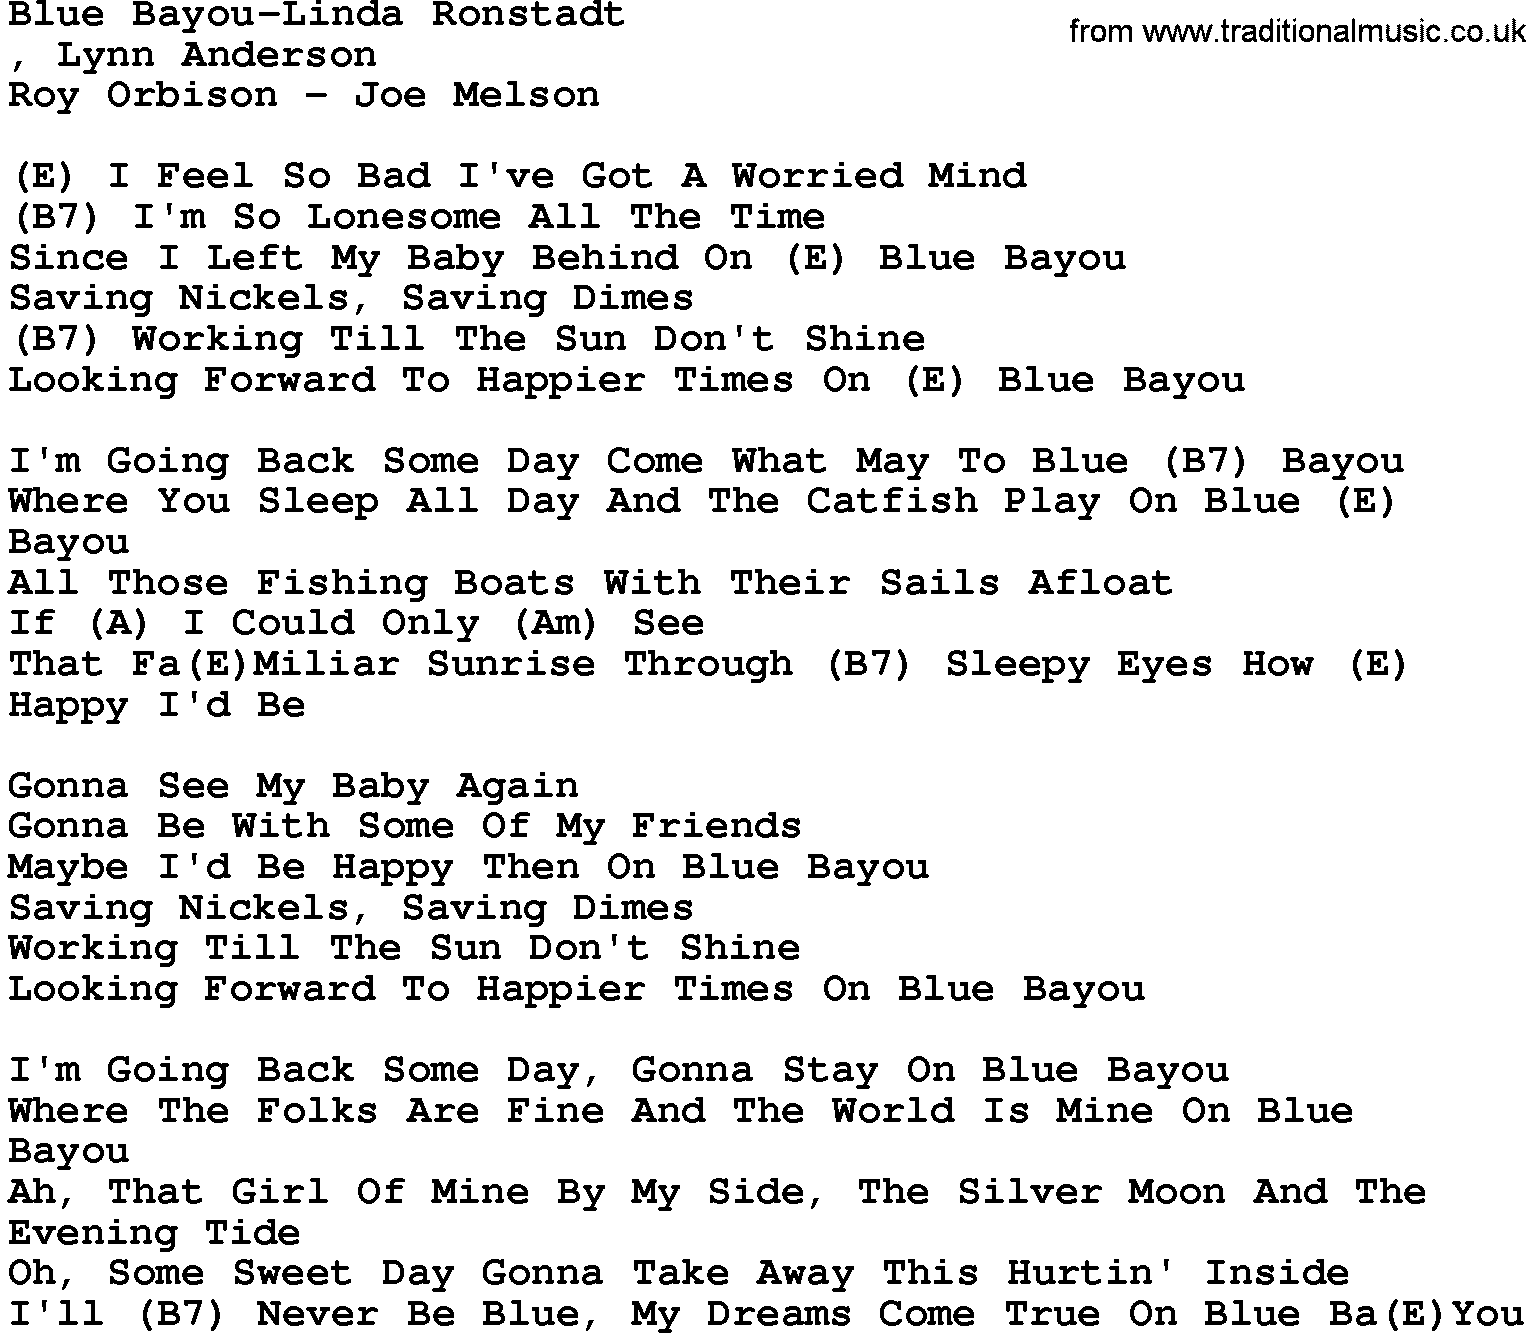 Country music song: Blue Bayou-Linda Ronstadt lyrics and chords